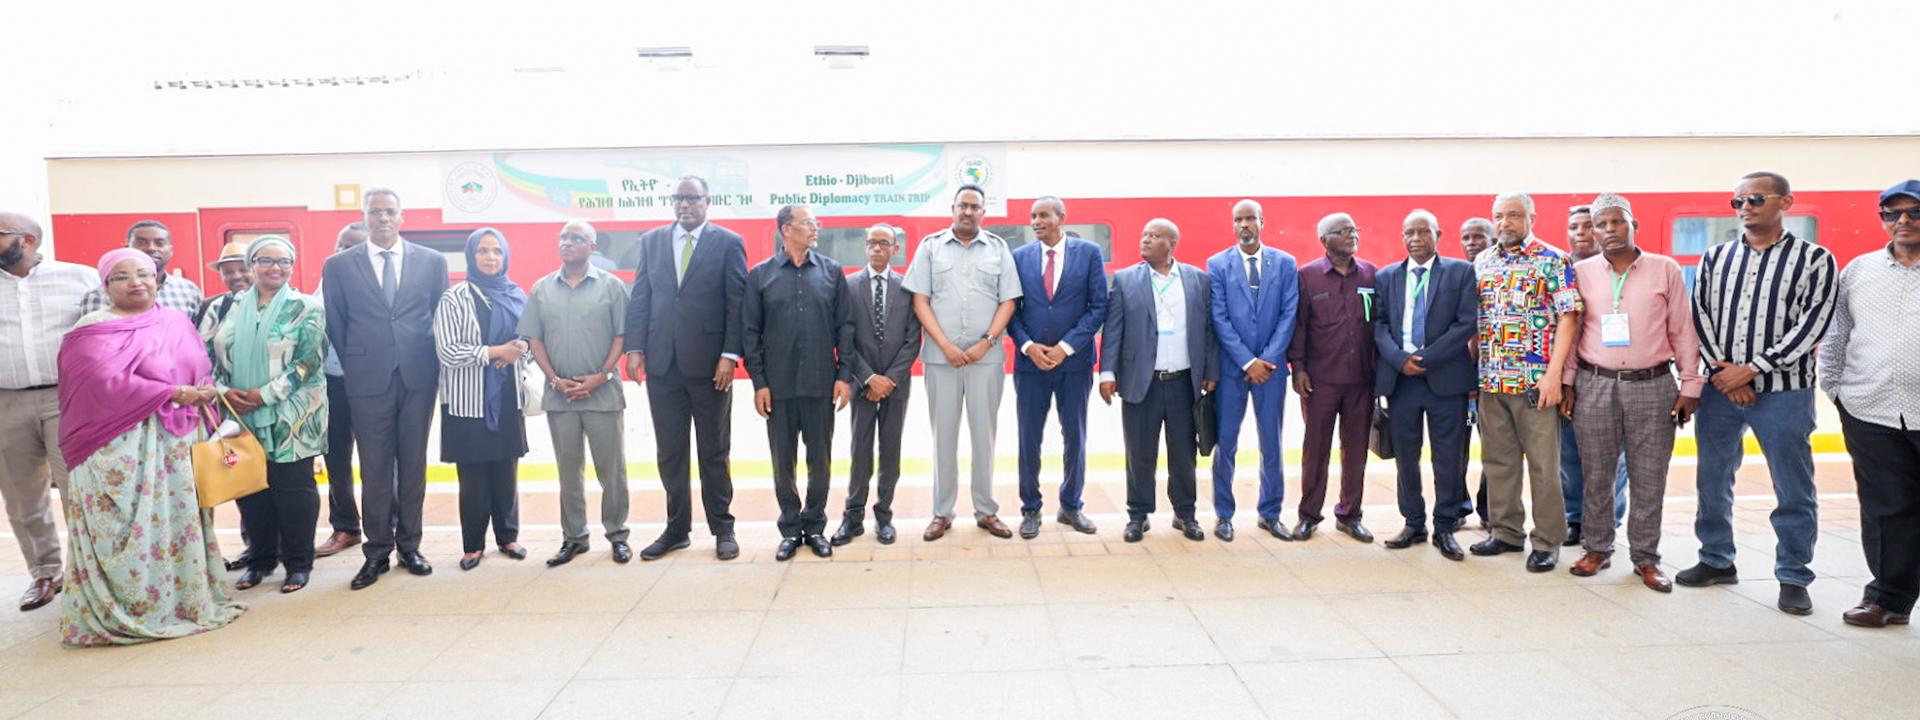 IGAD launches the Djibouti-Ethiopia train caravan to promote regional integration